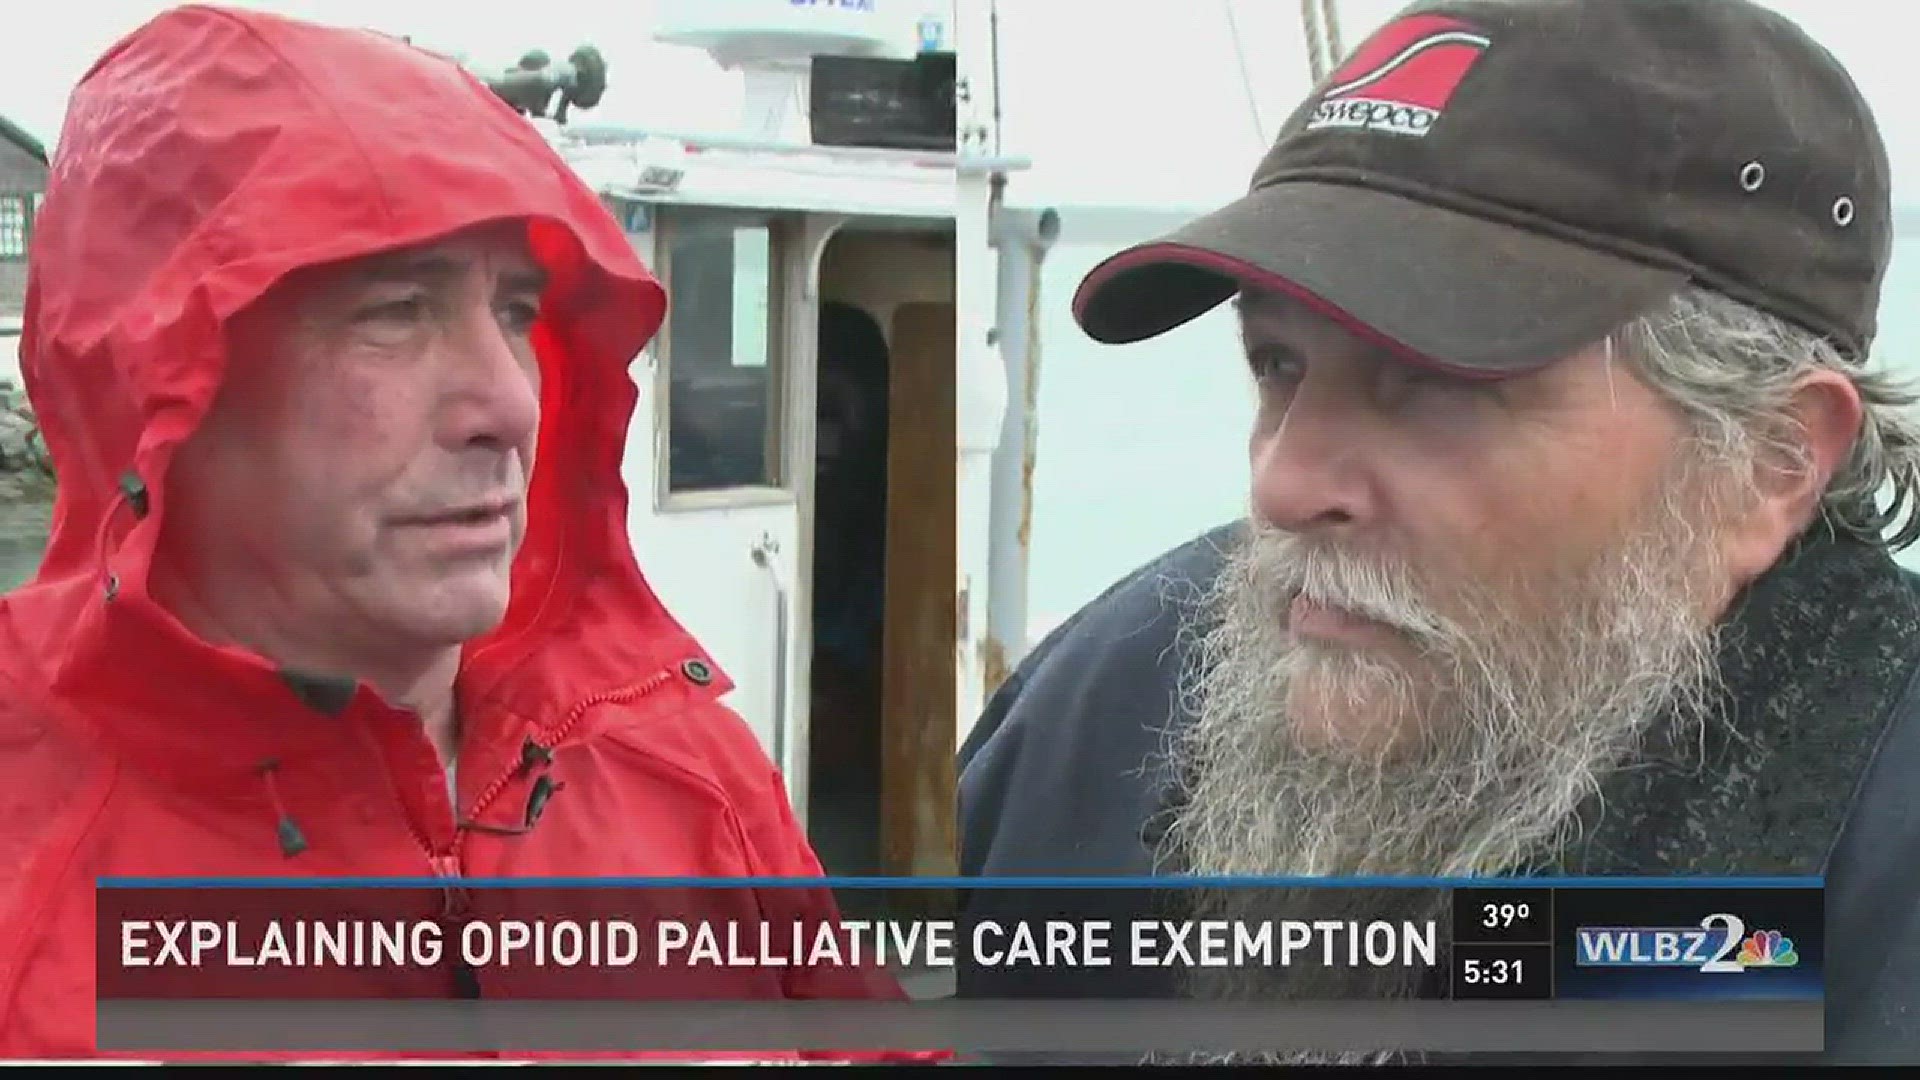 Explaining opioid palliative care exemption